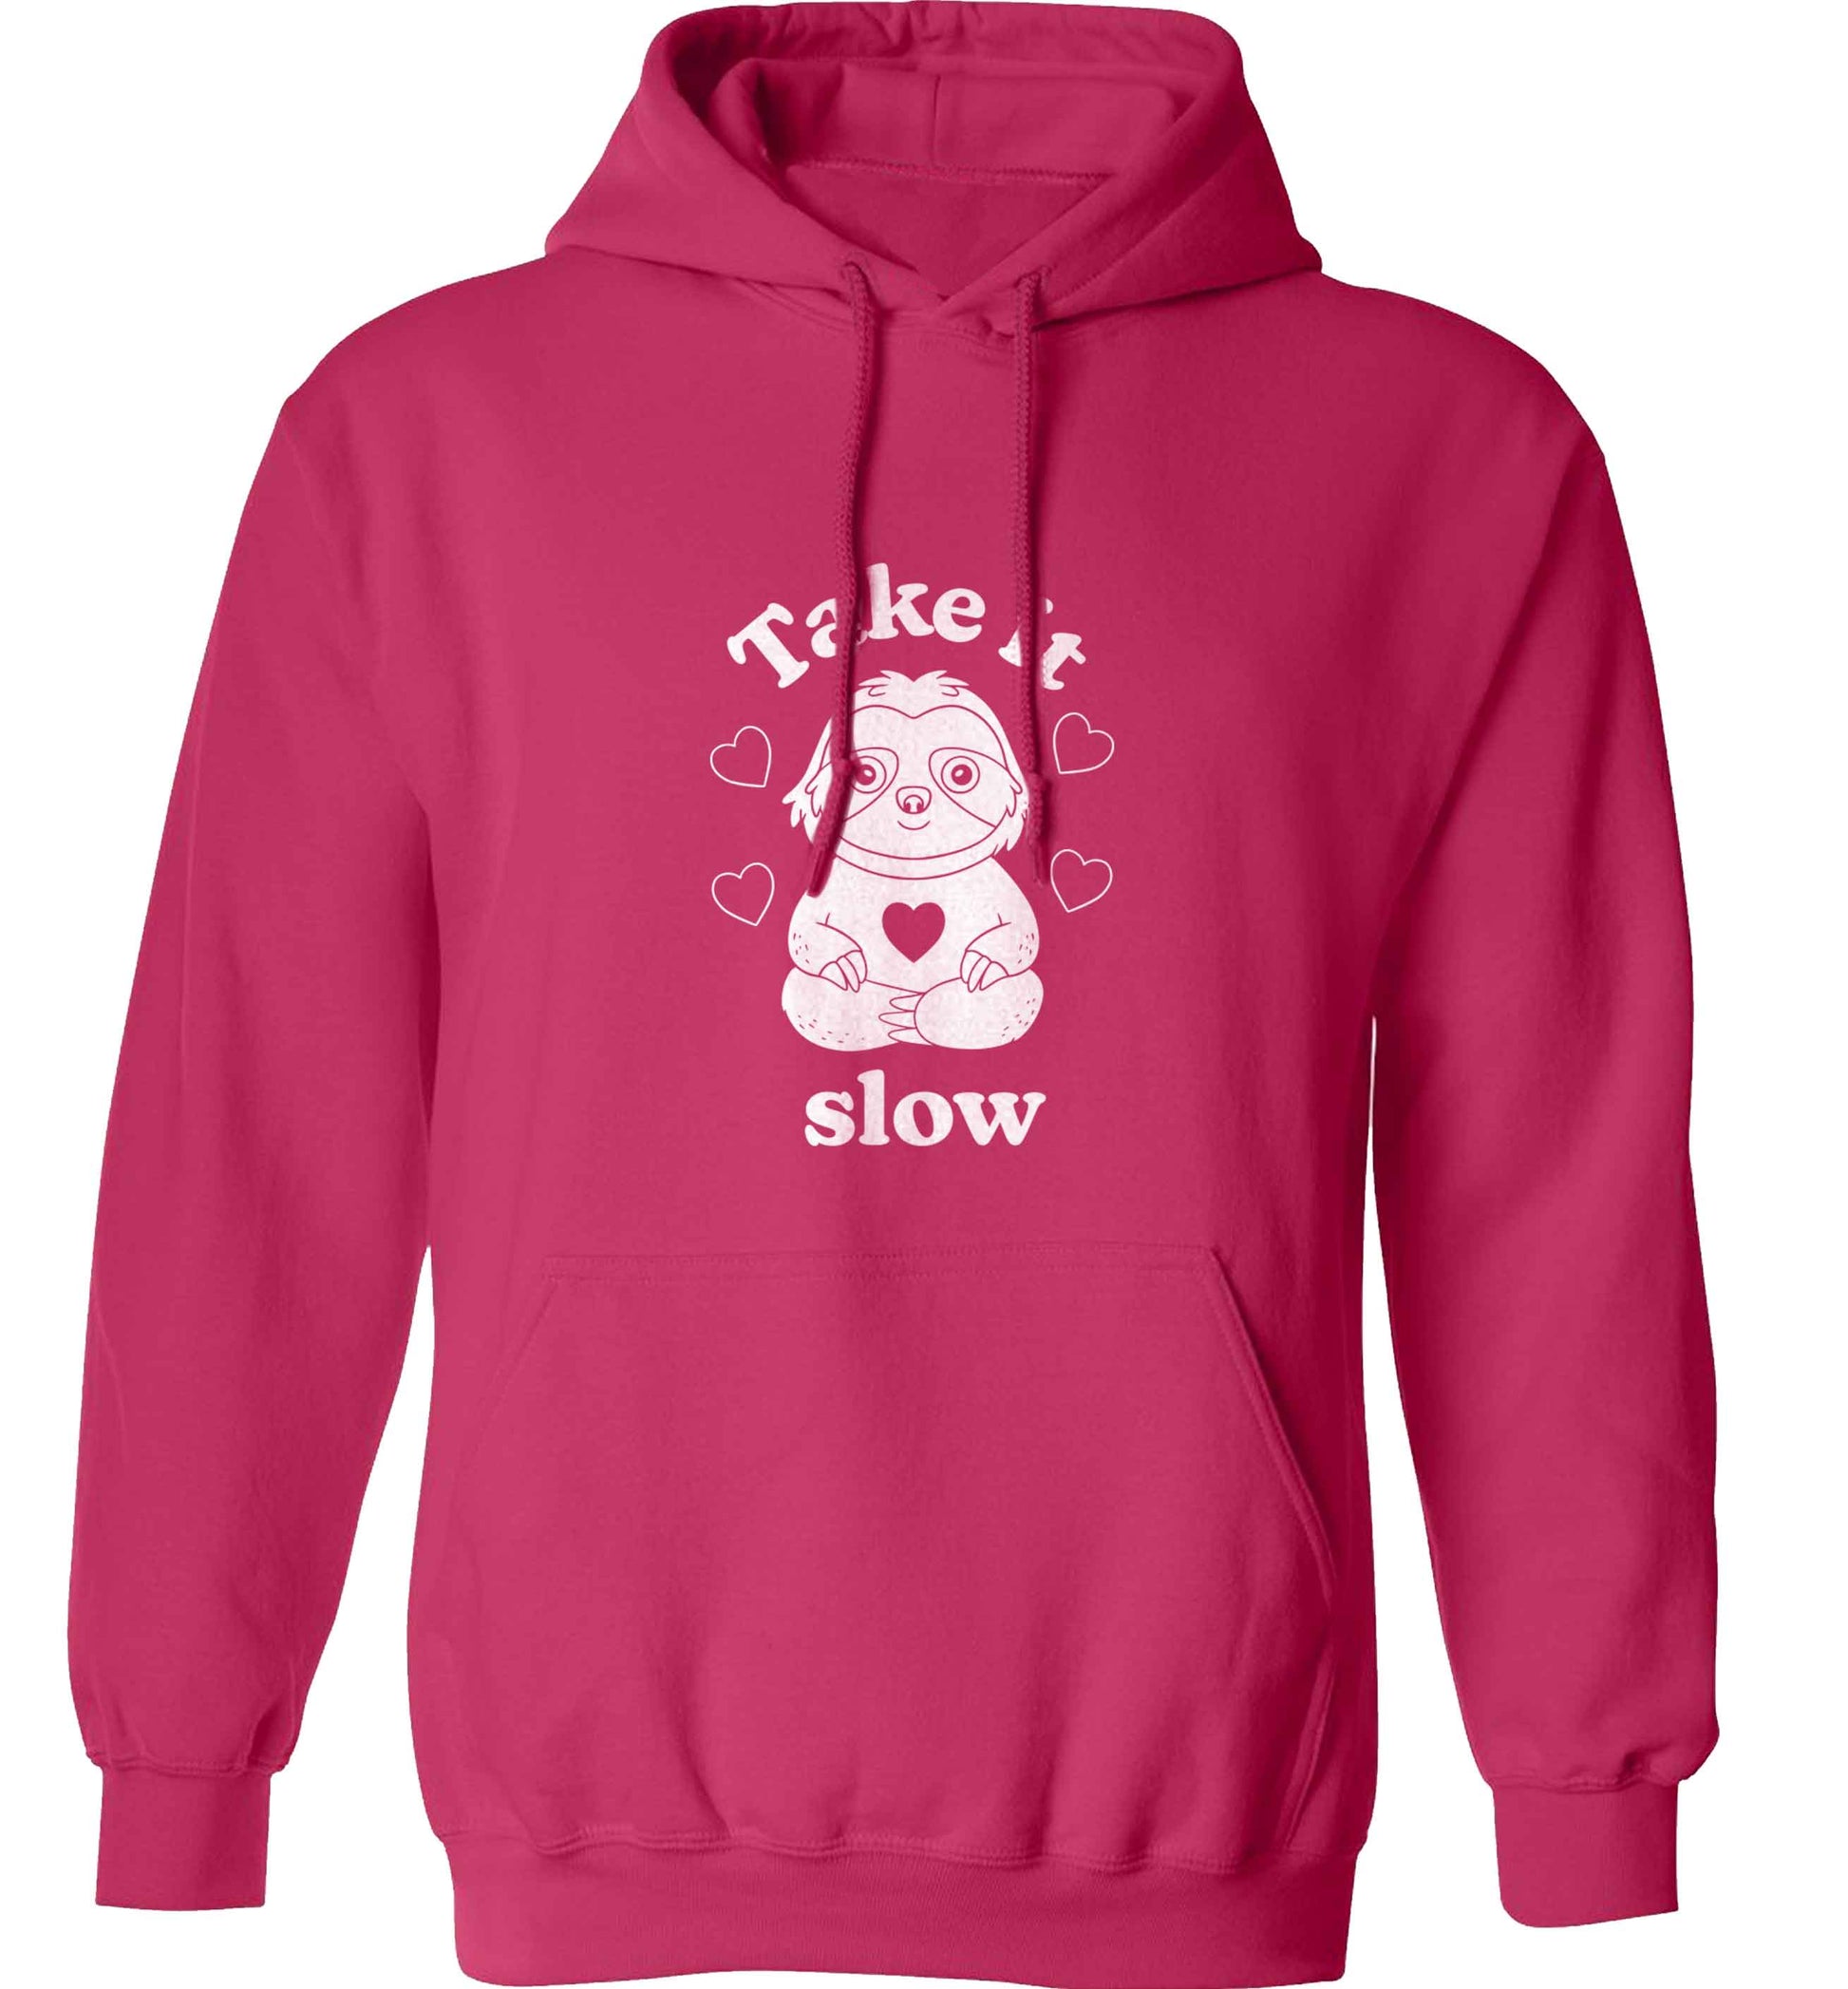 Take it slow adults unisex pink hoodie 2XL